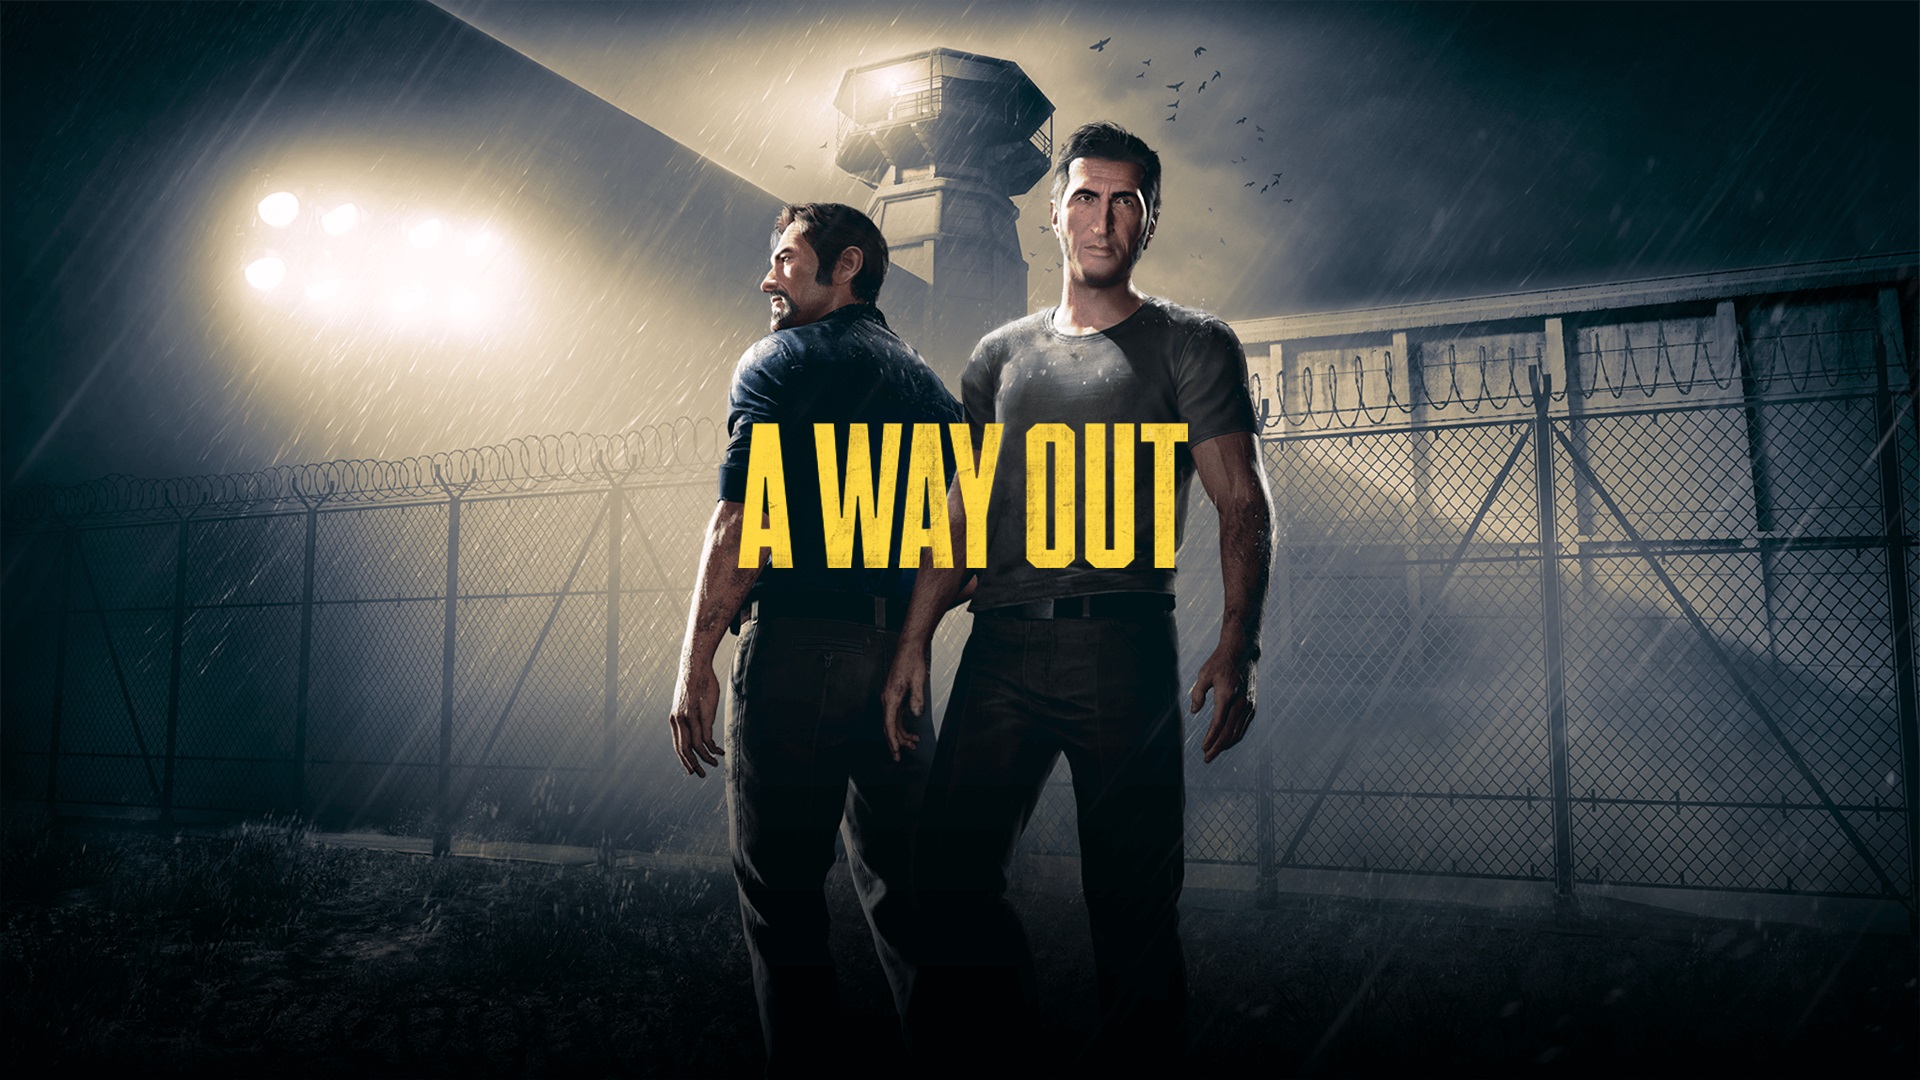 Ap away. Way out игра. Побег из тюрьмы a way out. A way out Постер. A way out обложка.